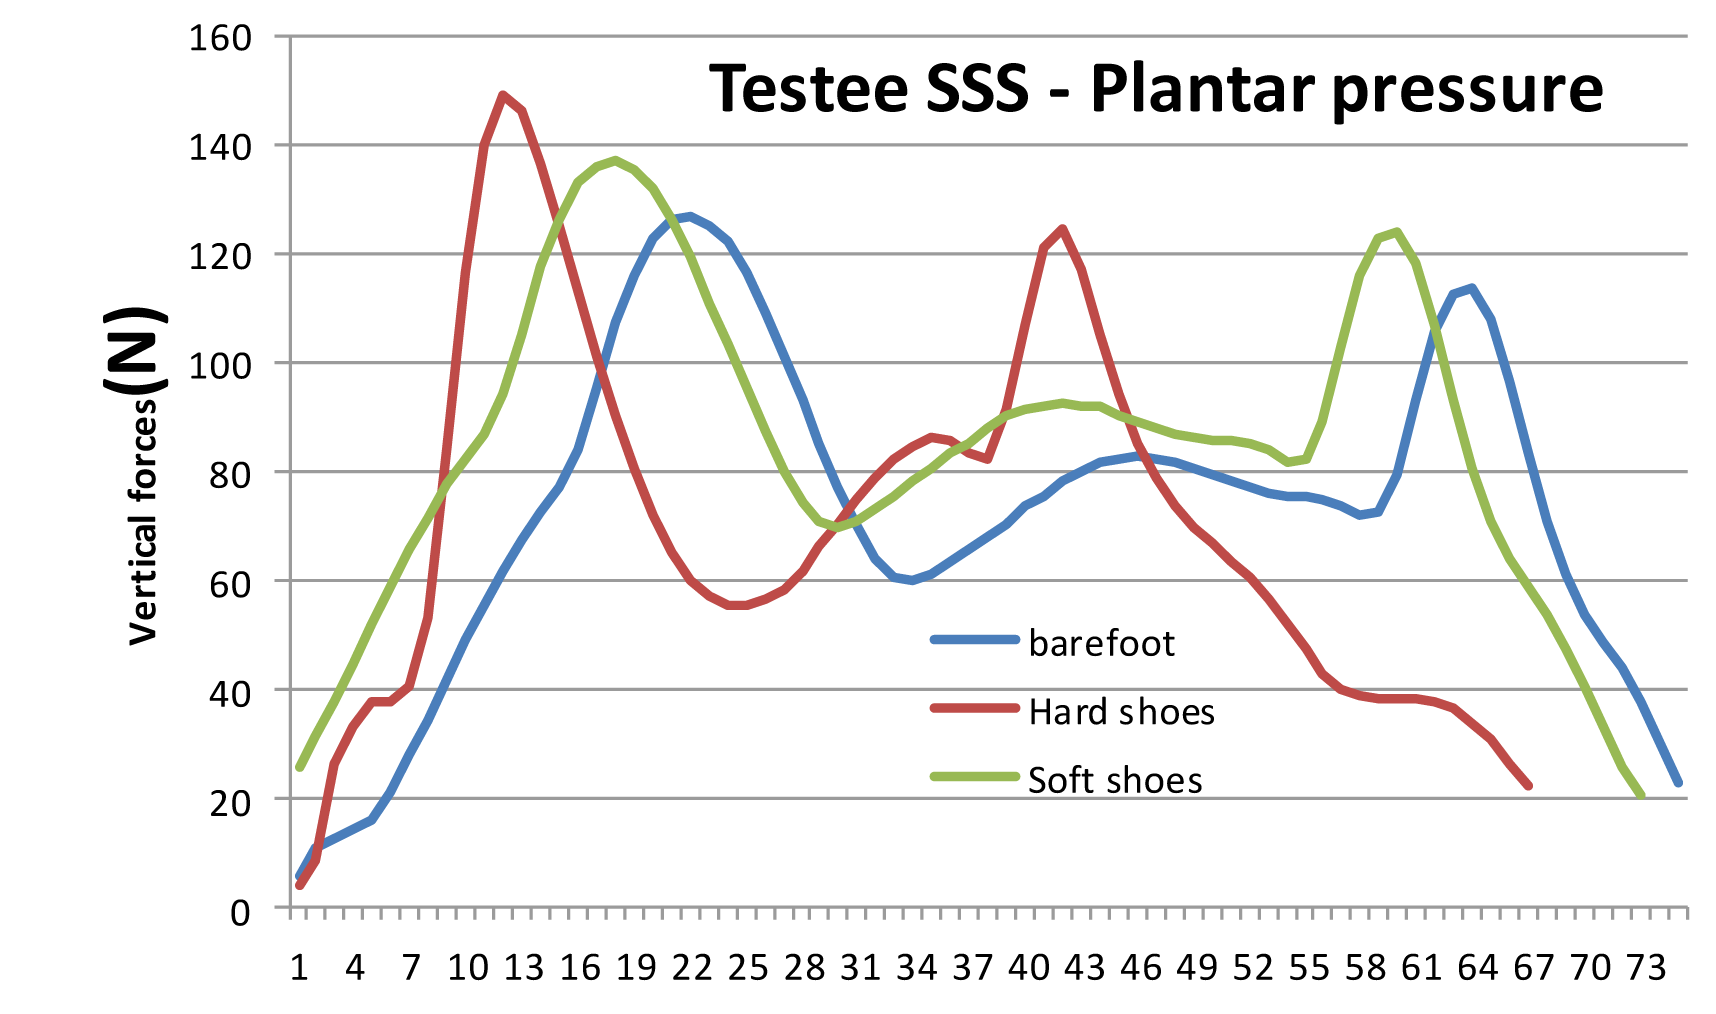 Testee SSS - Plantar pressure